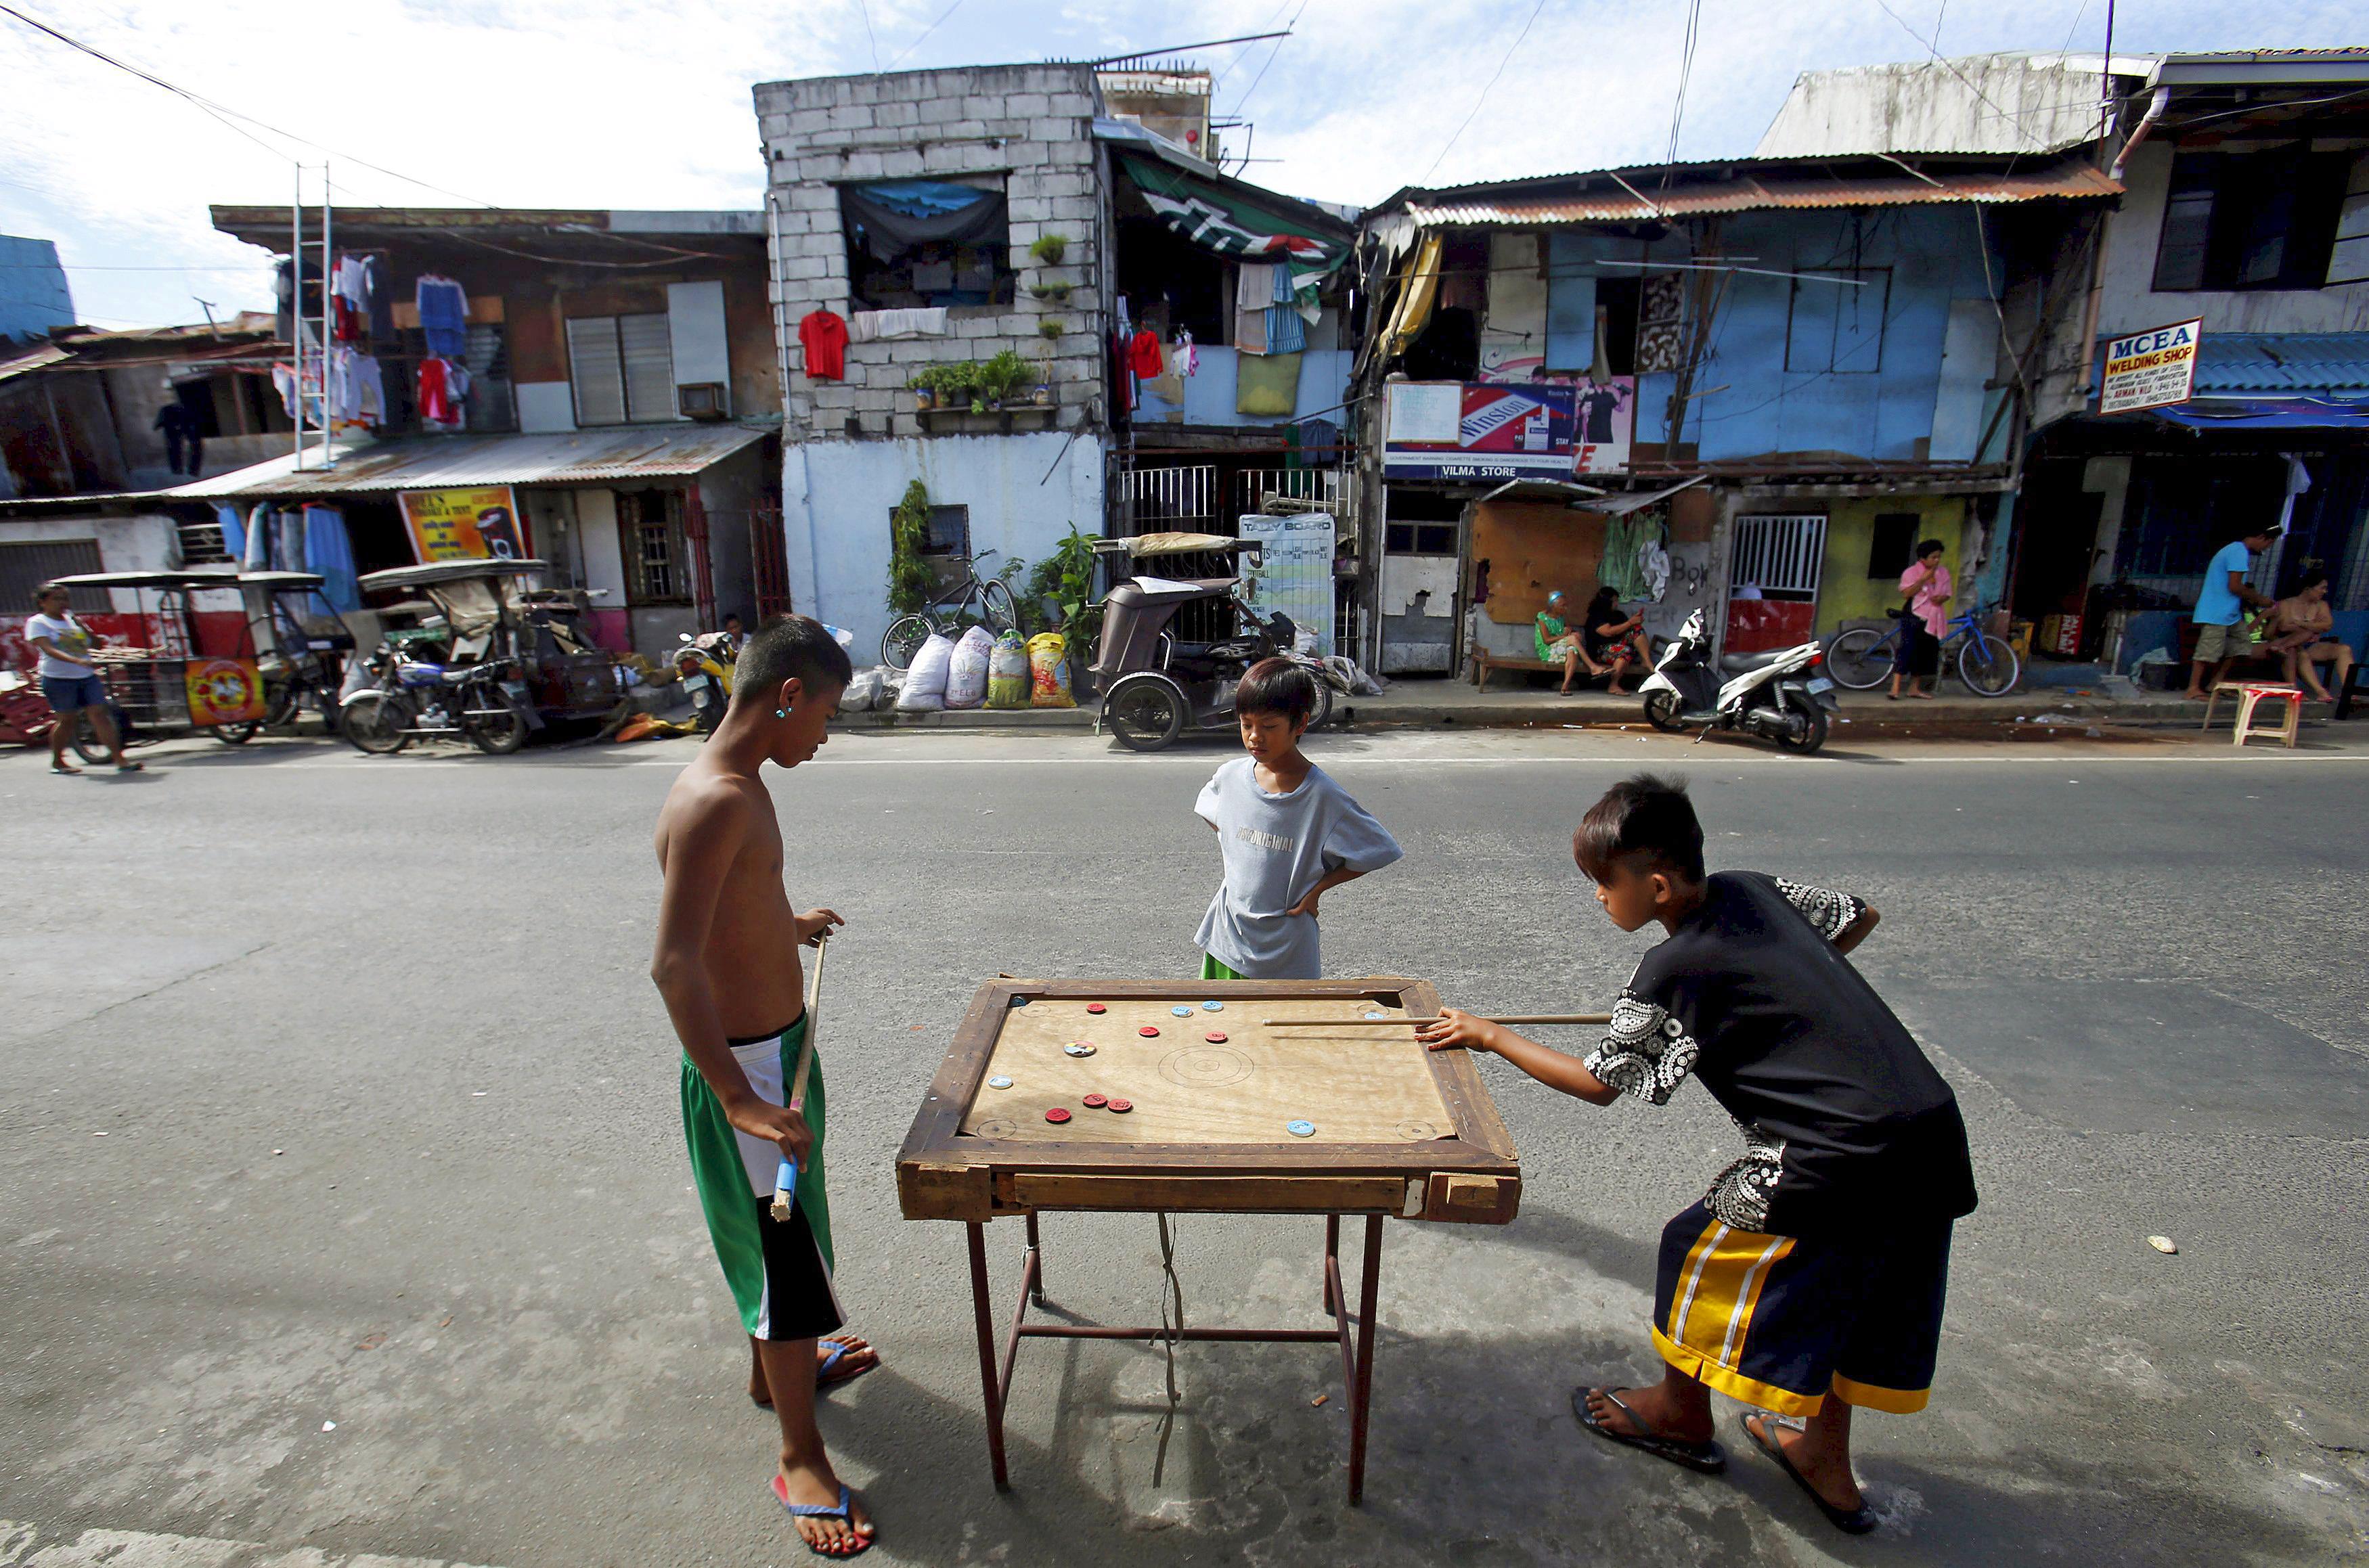 PHILIPPINES-GAMBLING/WIDERIMAGE